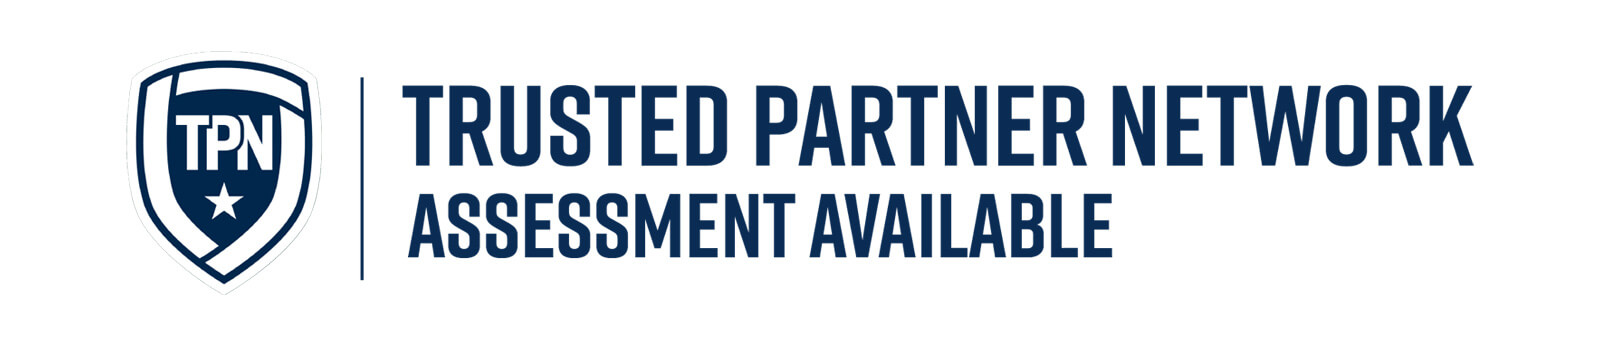 trusted partner network assessment available